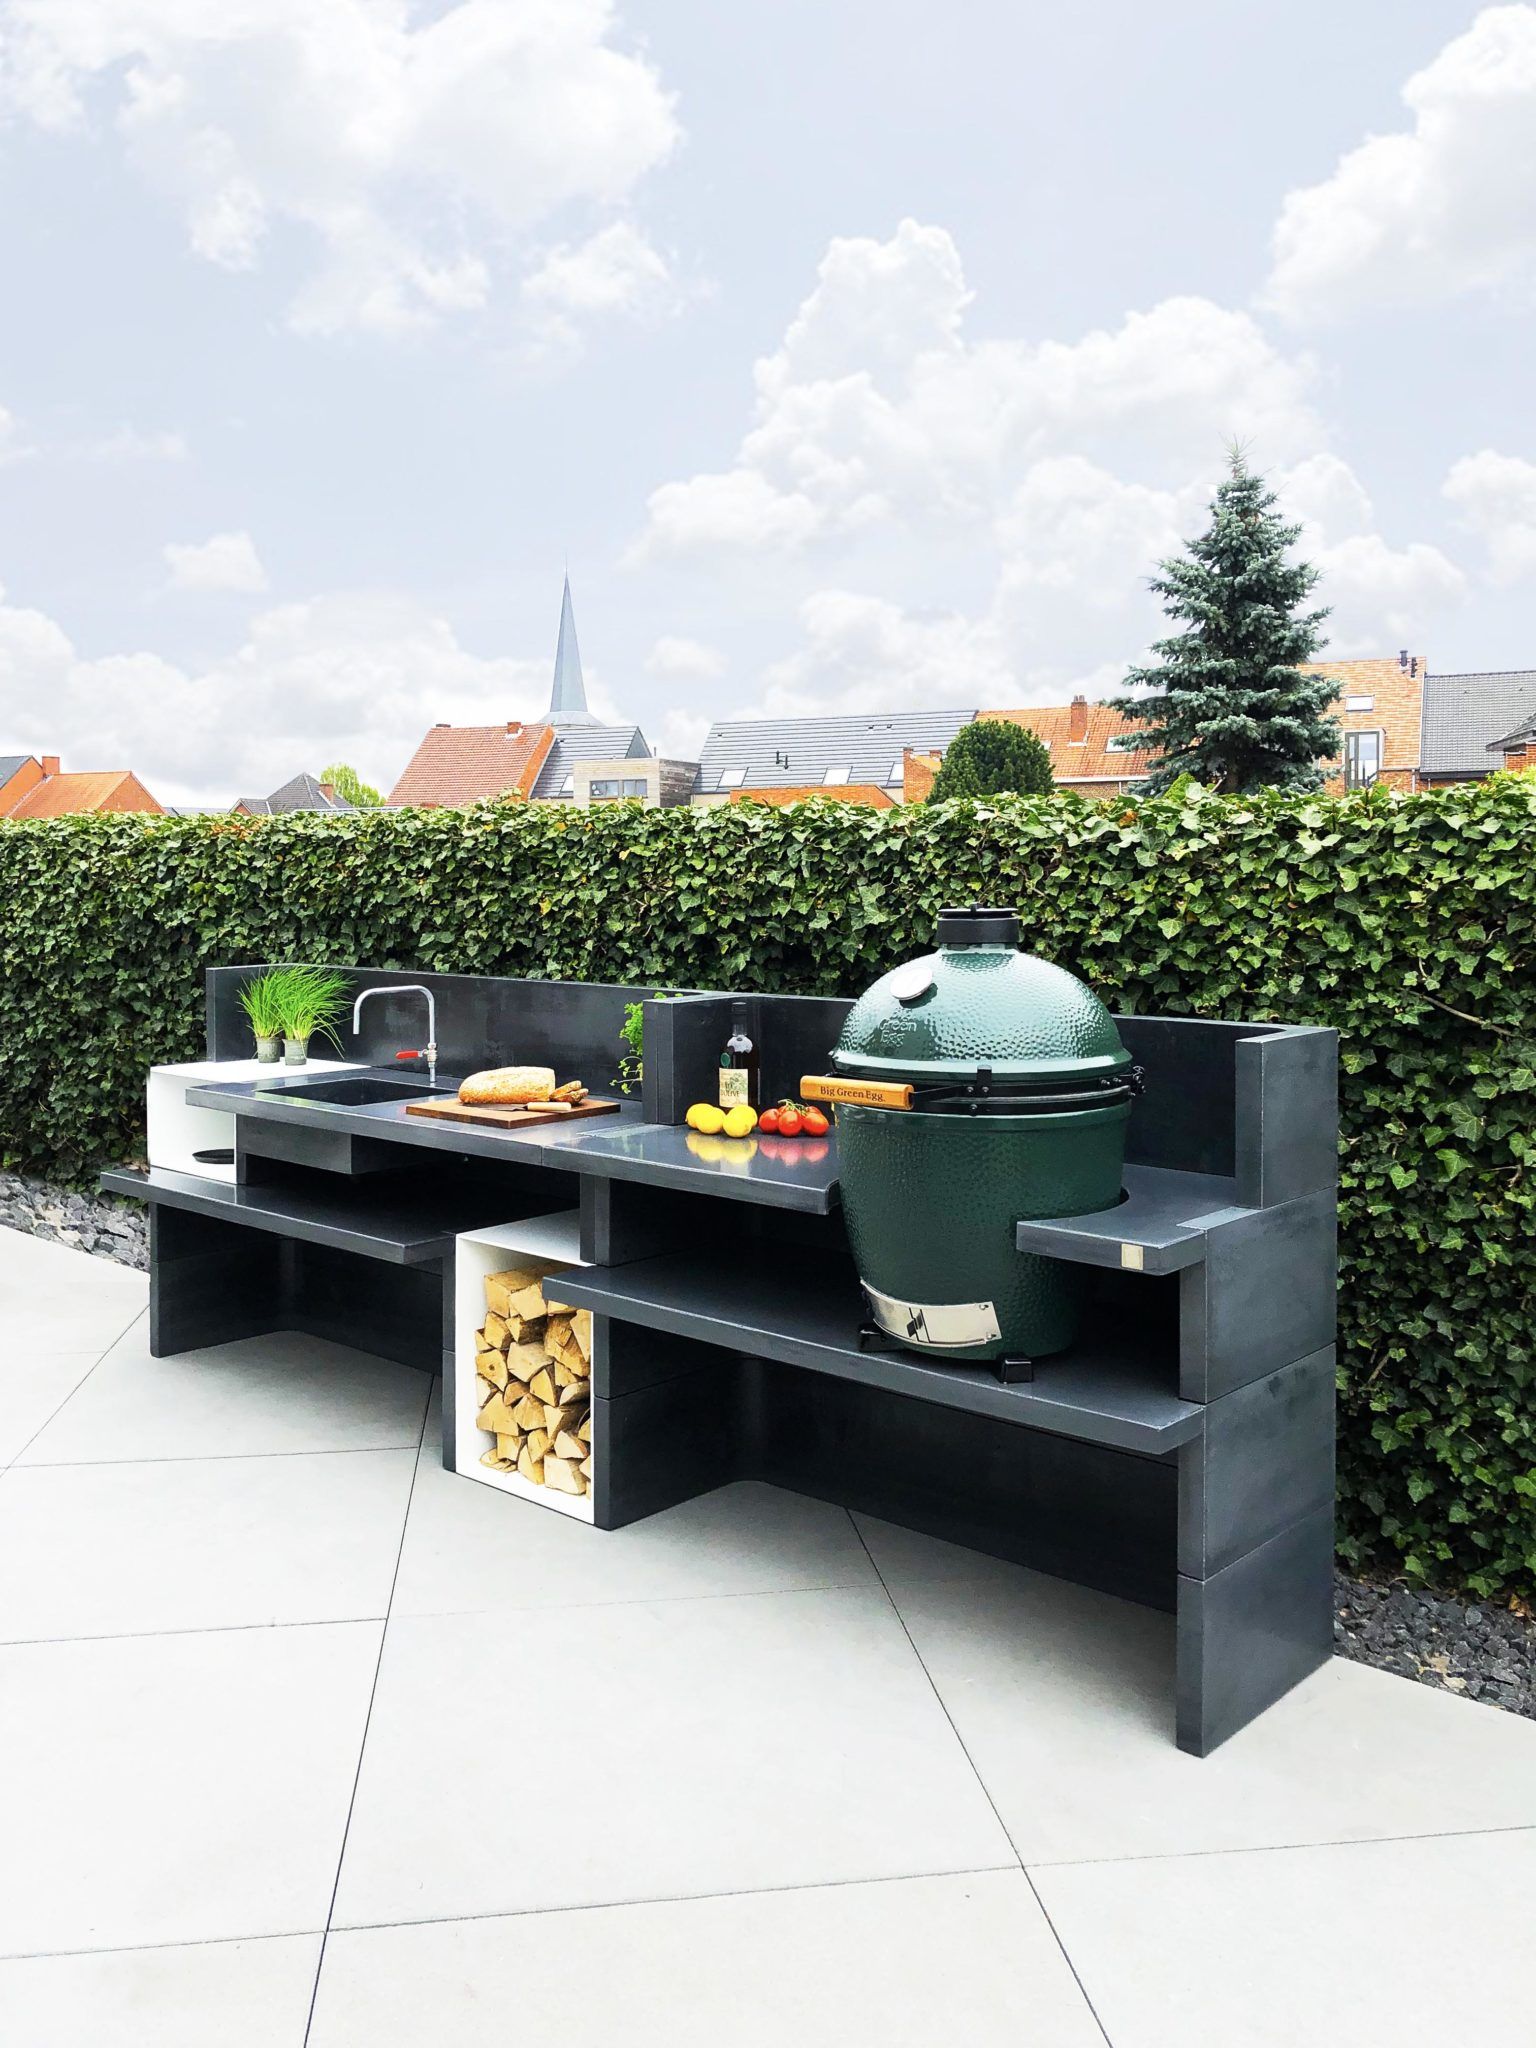 Modular outdoor kitchen – an amazing
  thing